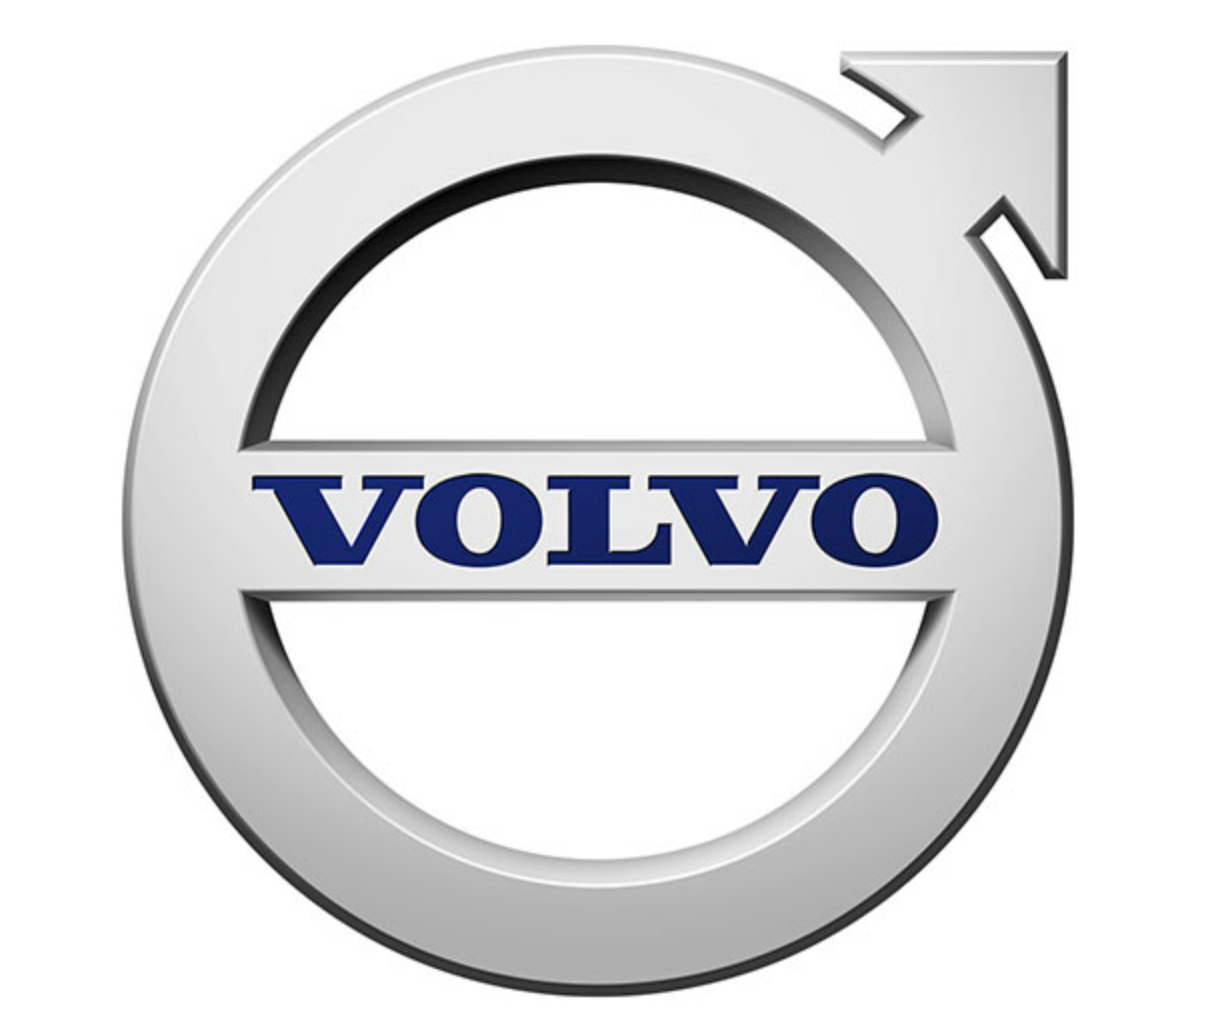 Volvo Truck Parts - North Georgia Trucks and Parts